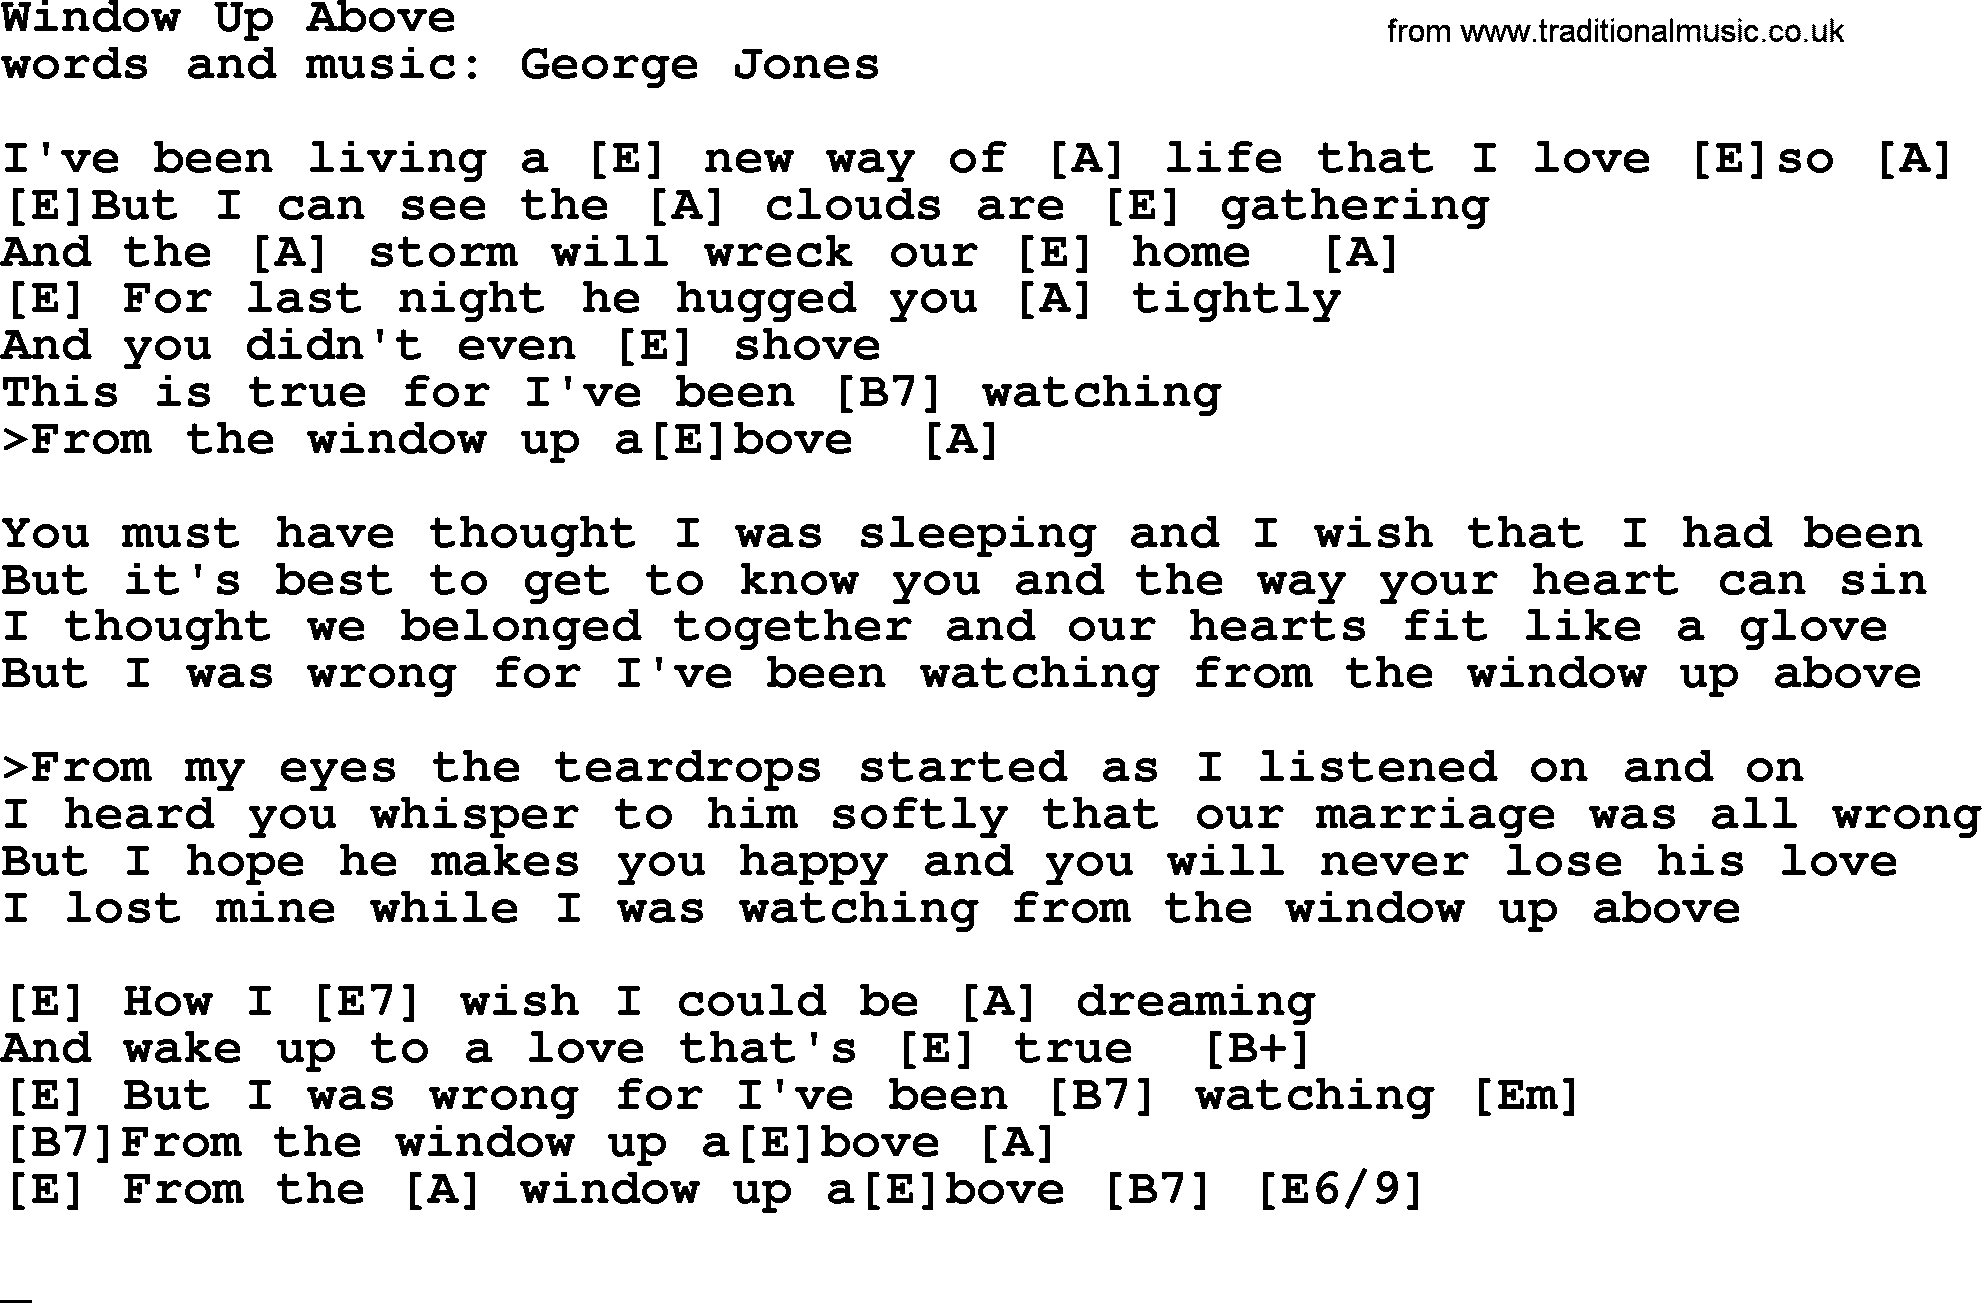 George Jones song: Window Up Above, lyrics and chords